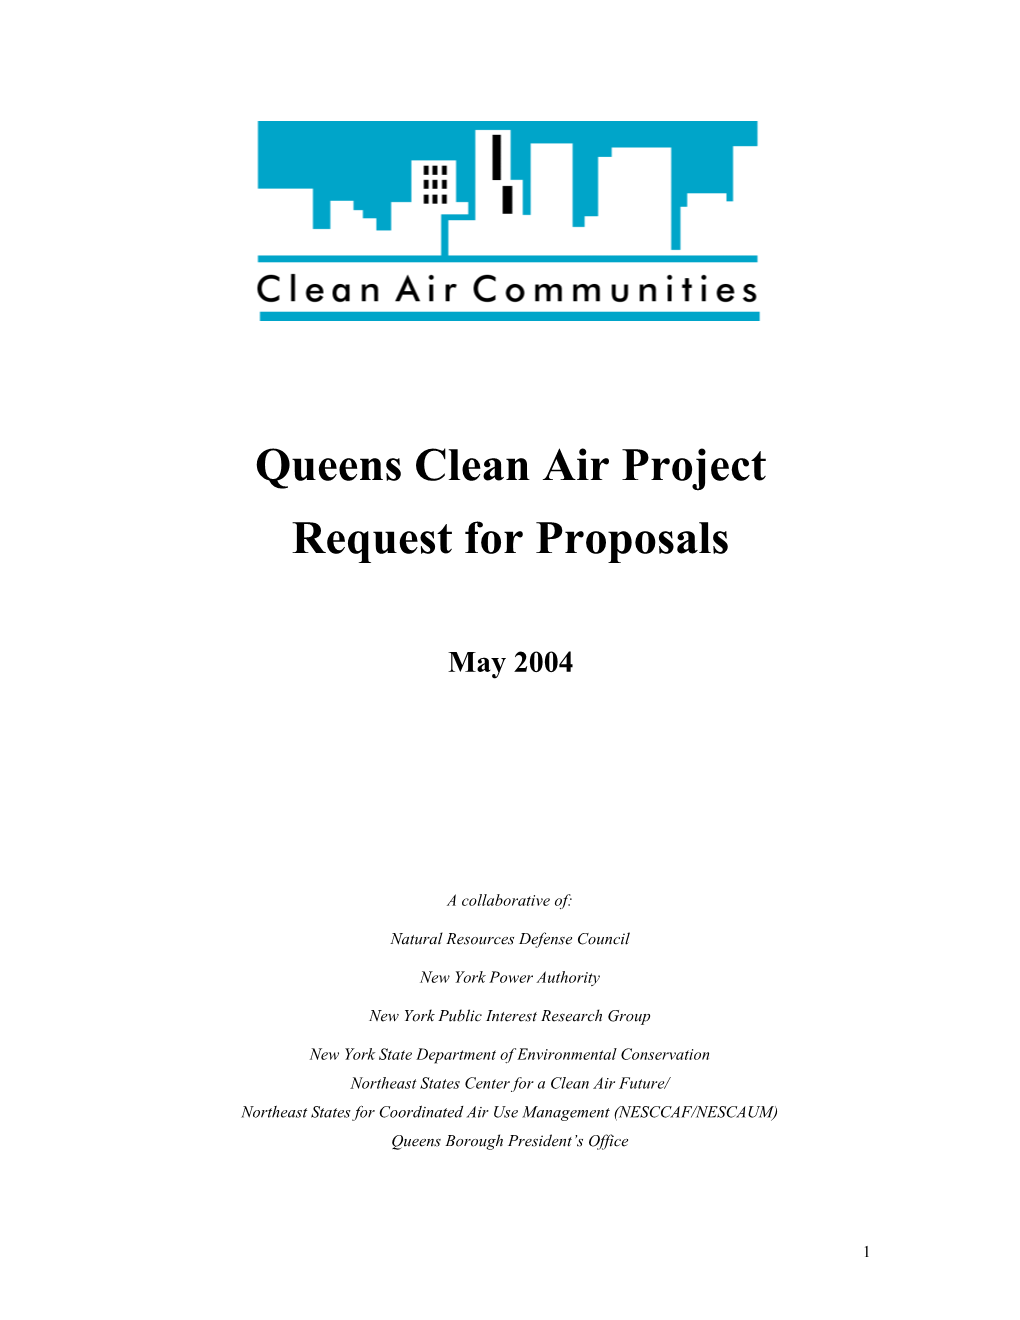 Partnership for Clean Air Communities